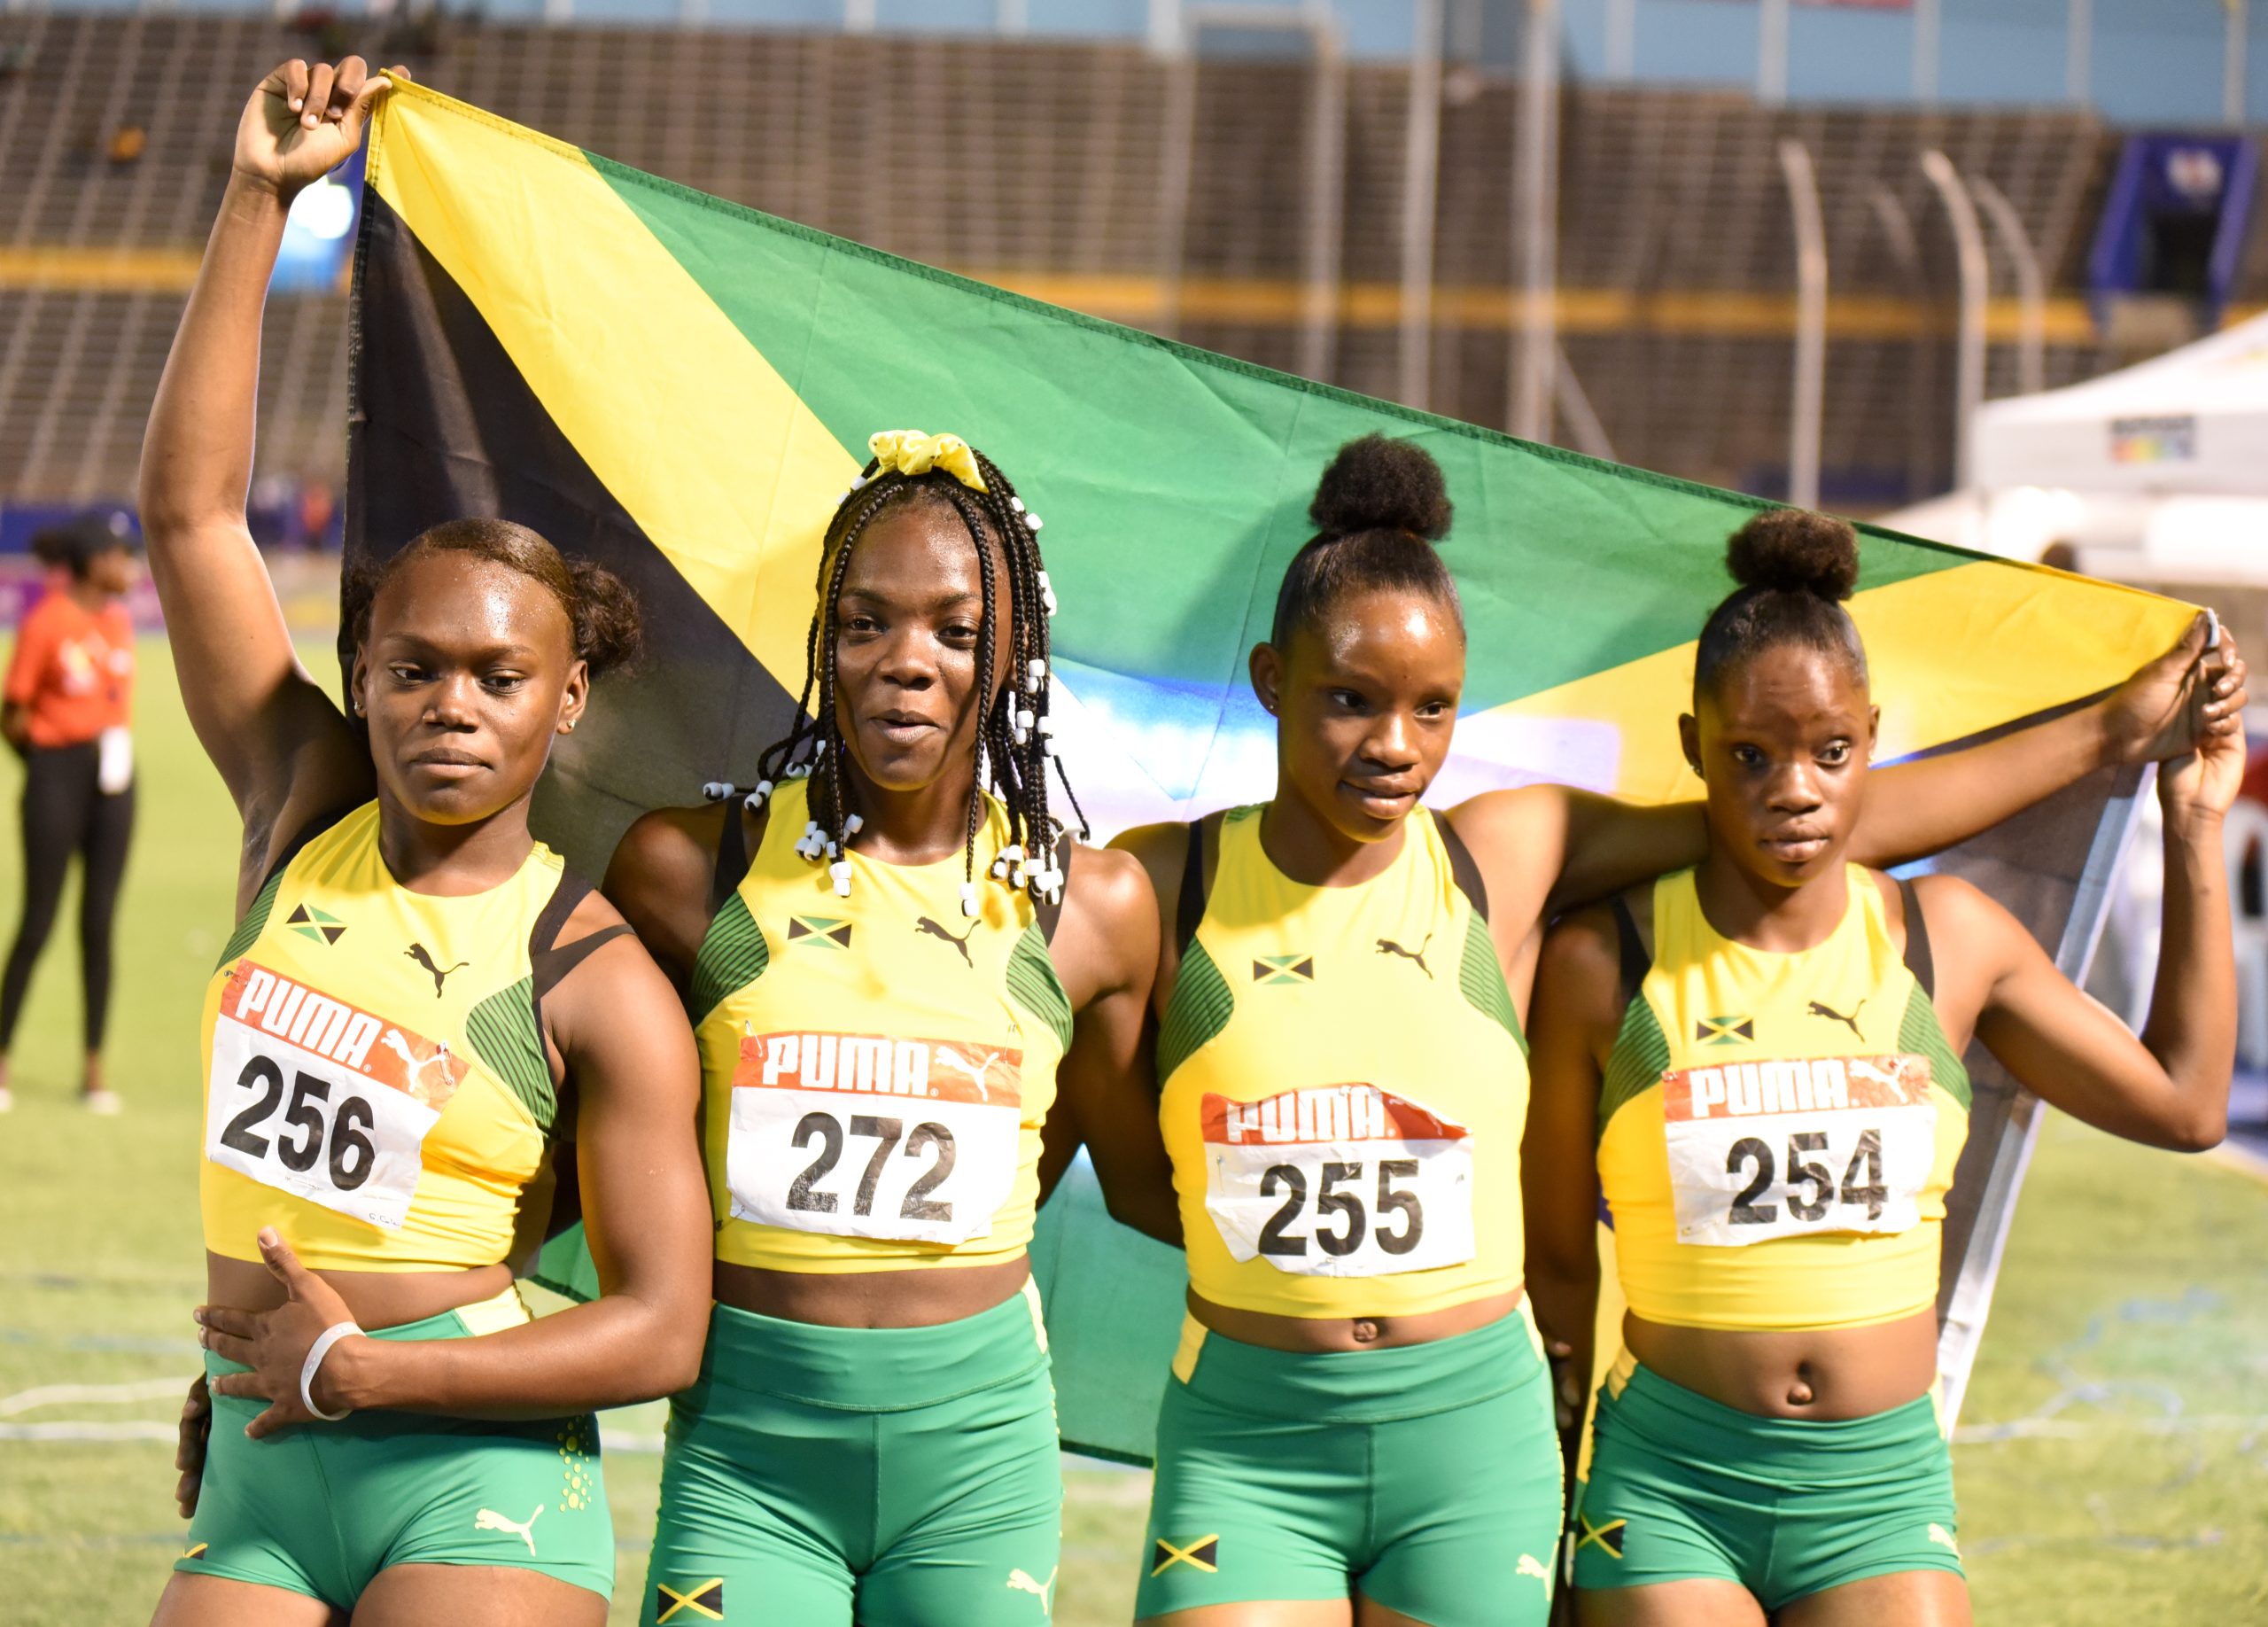 Jamaica shatter world U20 4x100m record at Carifta Games with 42.58 run